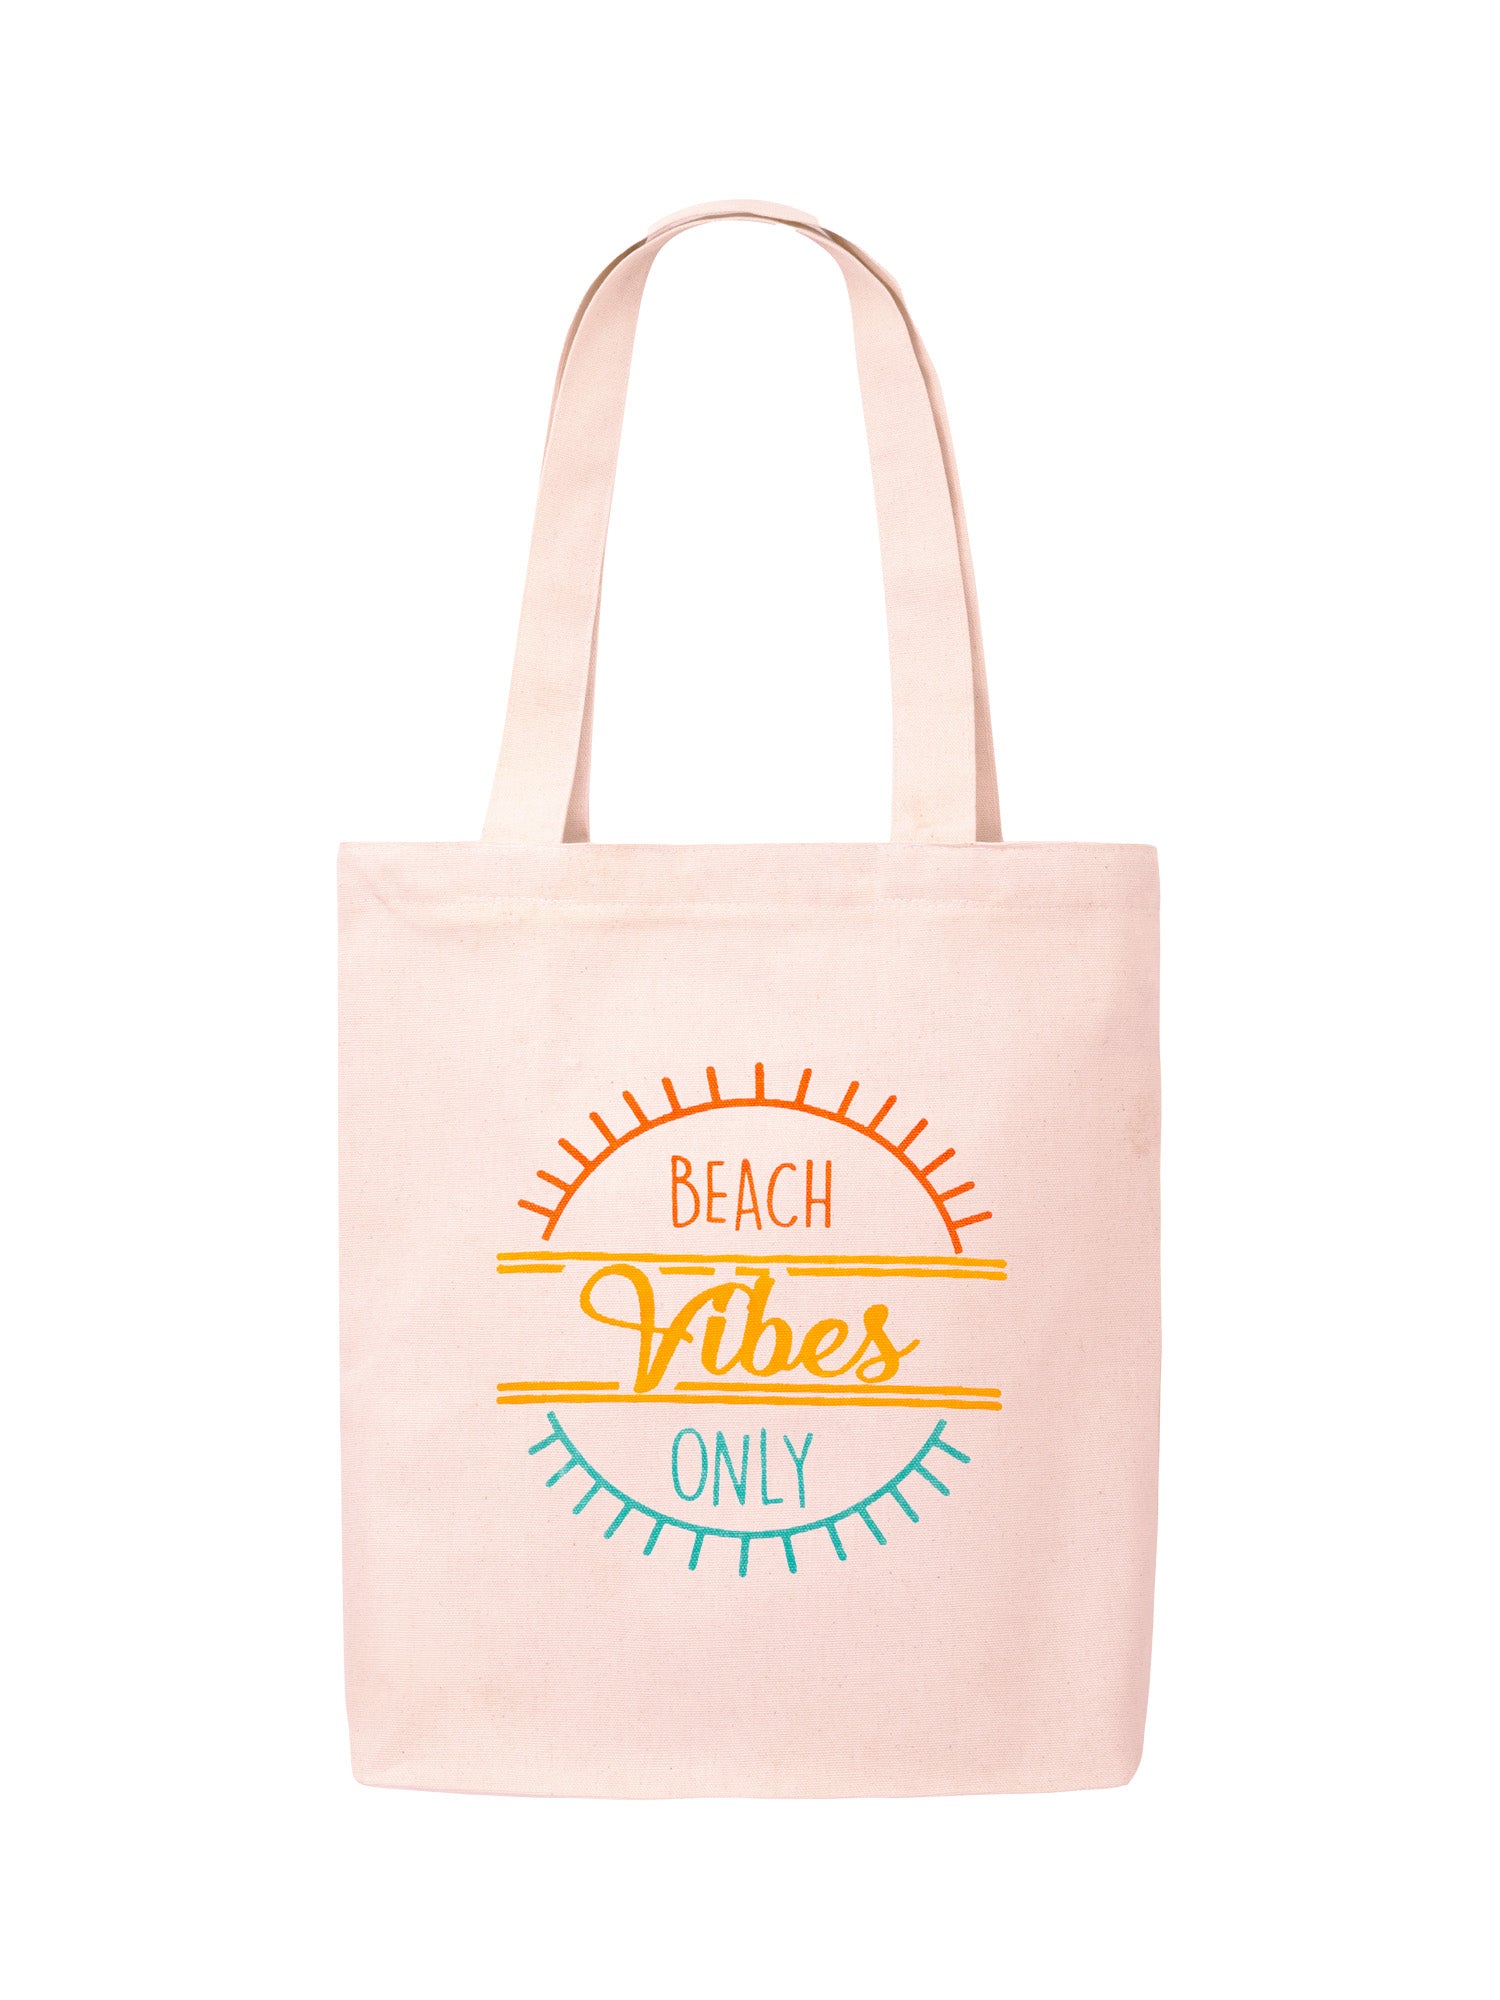 Beach Vibes Tote Bag